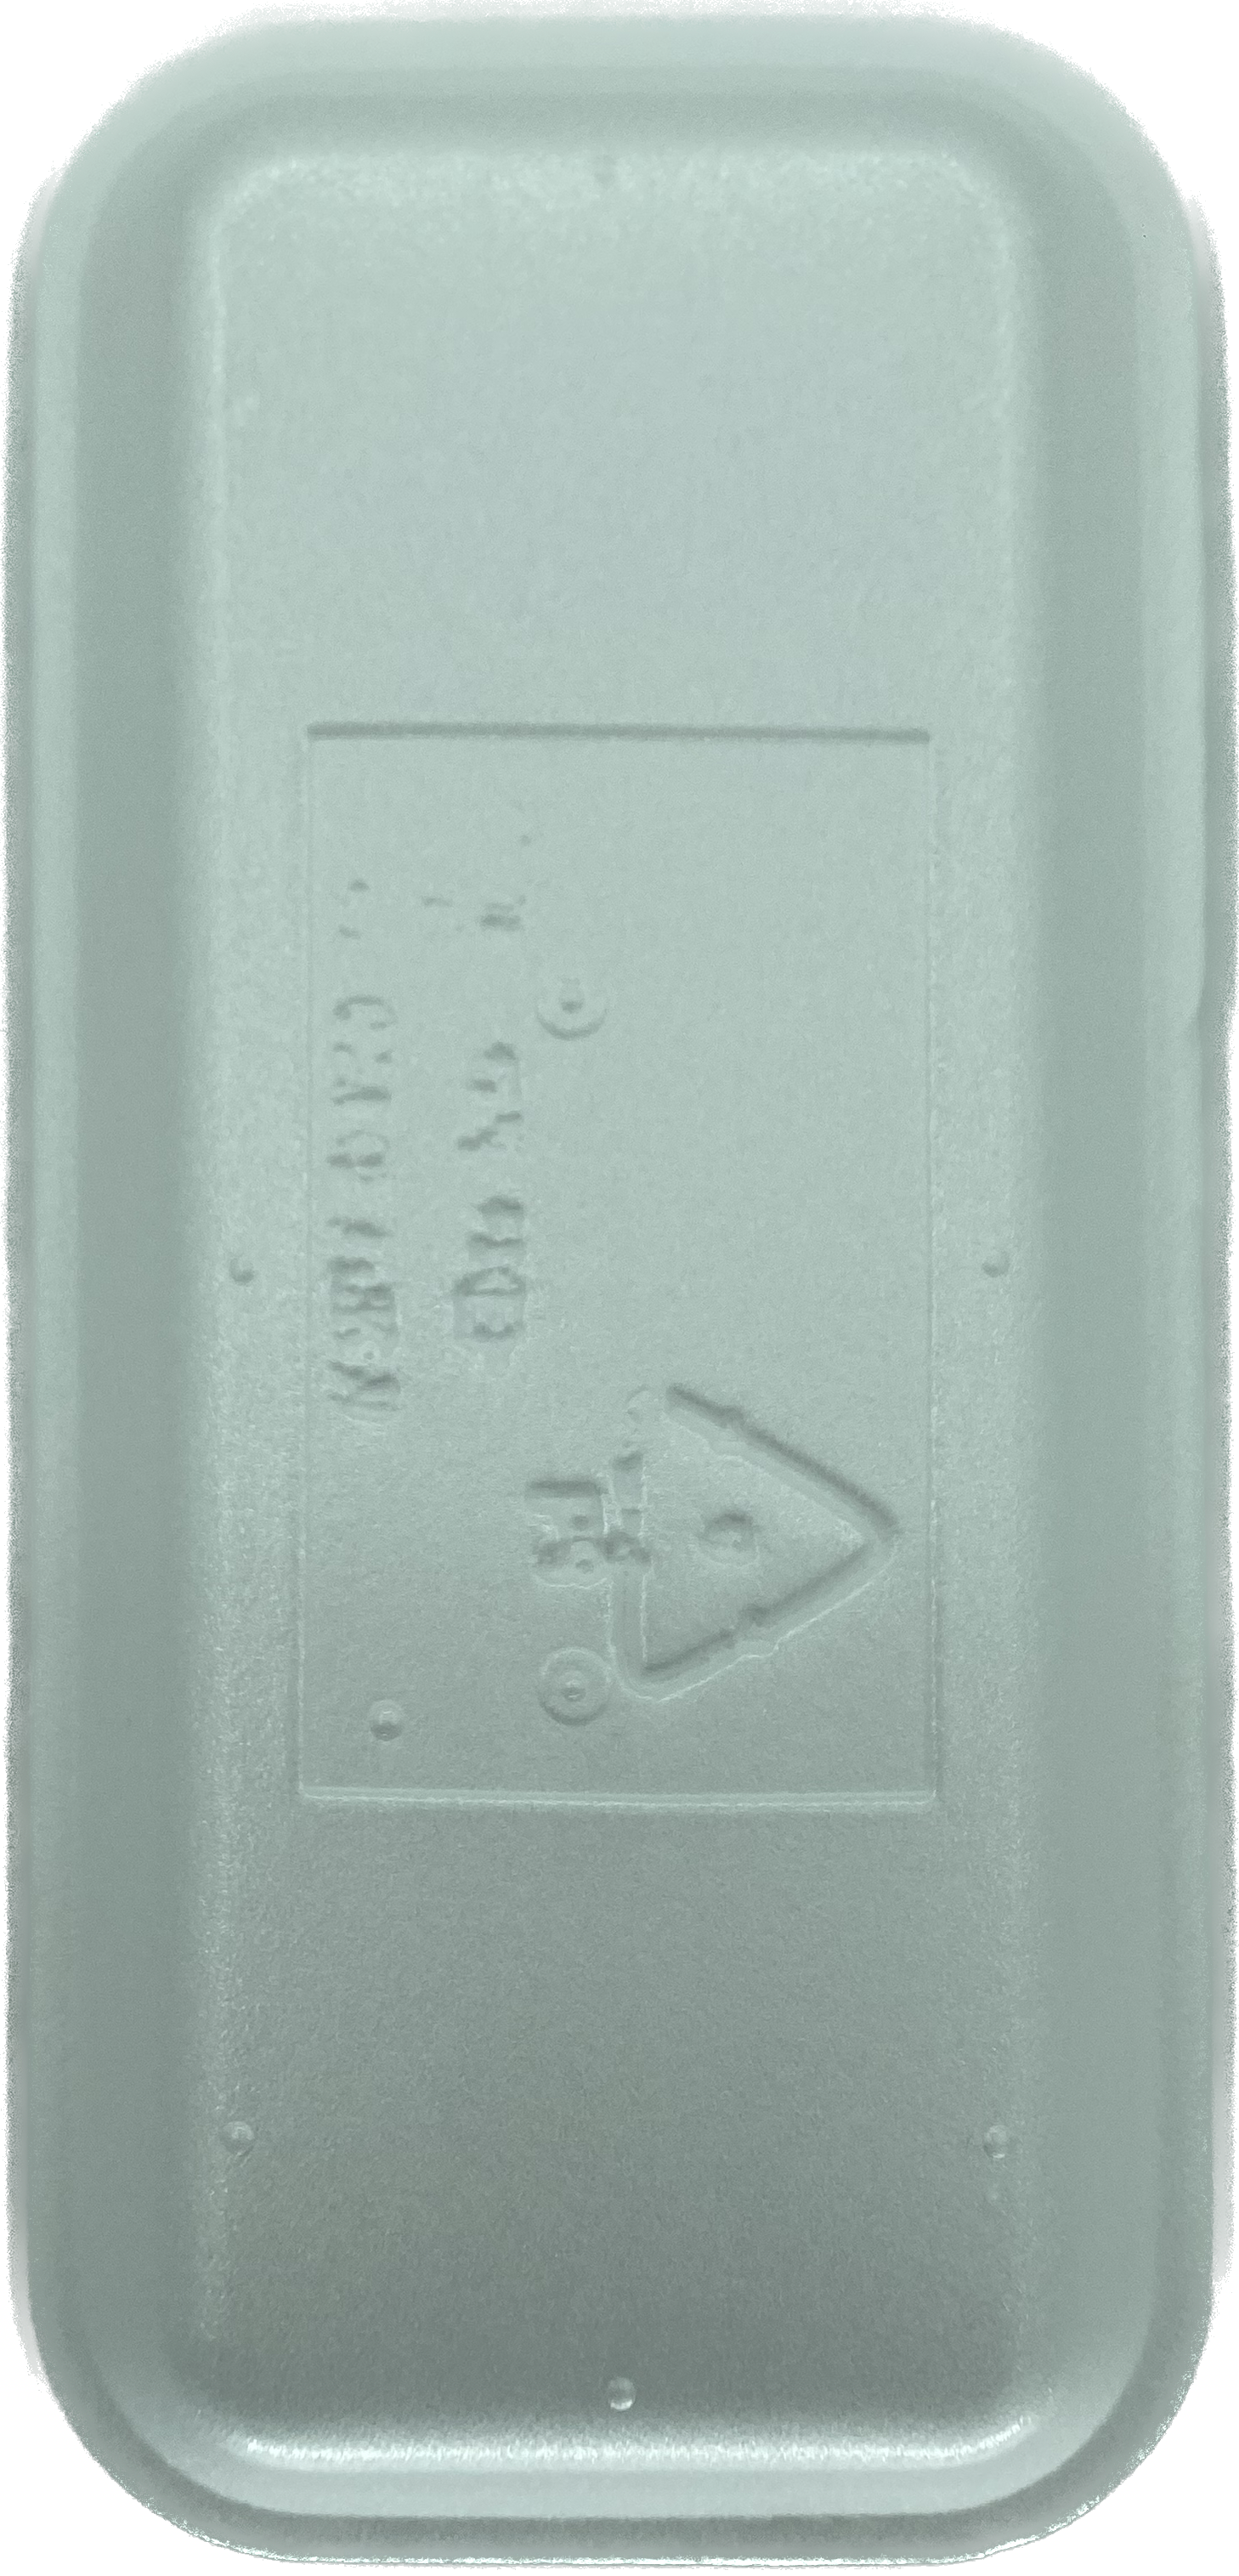 XPS Schaumschale 72 weiß, 225 x 103 x 22 mm, nicht absorbierend